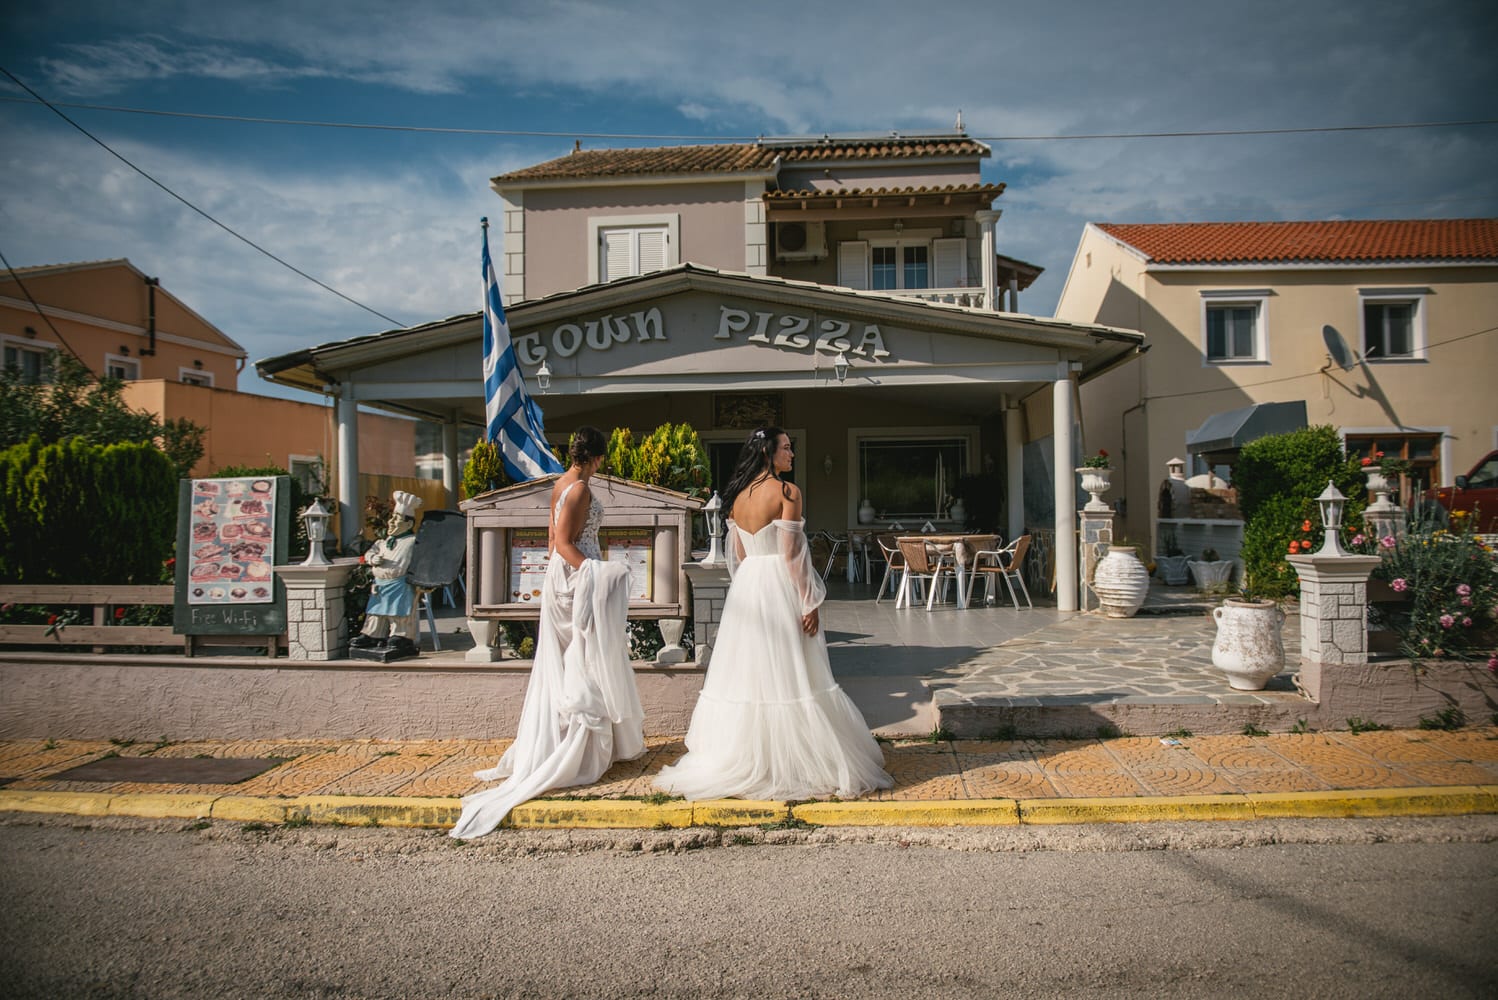 Bridal bouquets in hand, brides explore a flower shop during their Corfu elopement adventure.